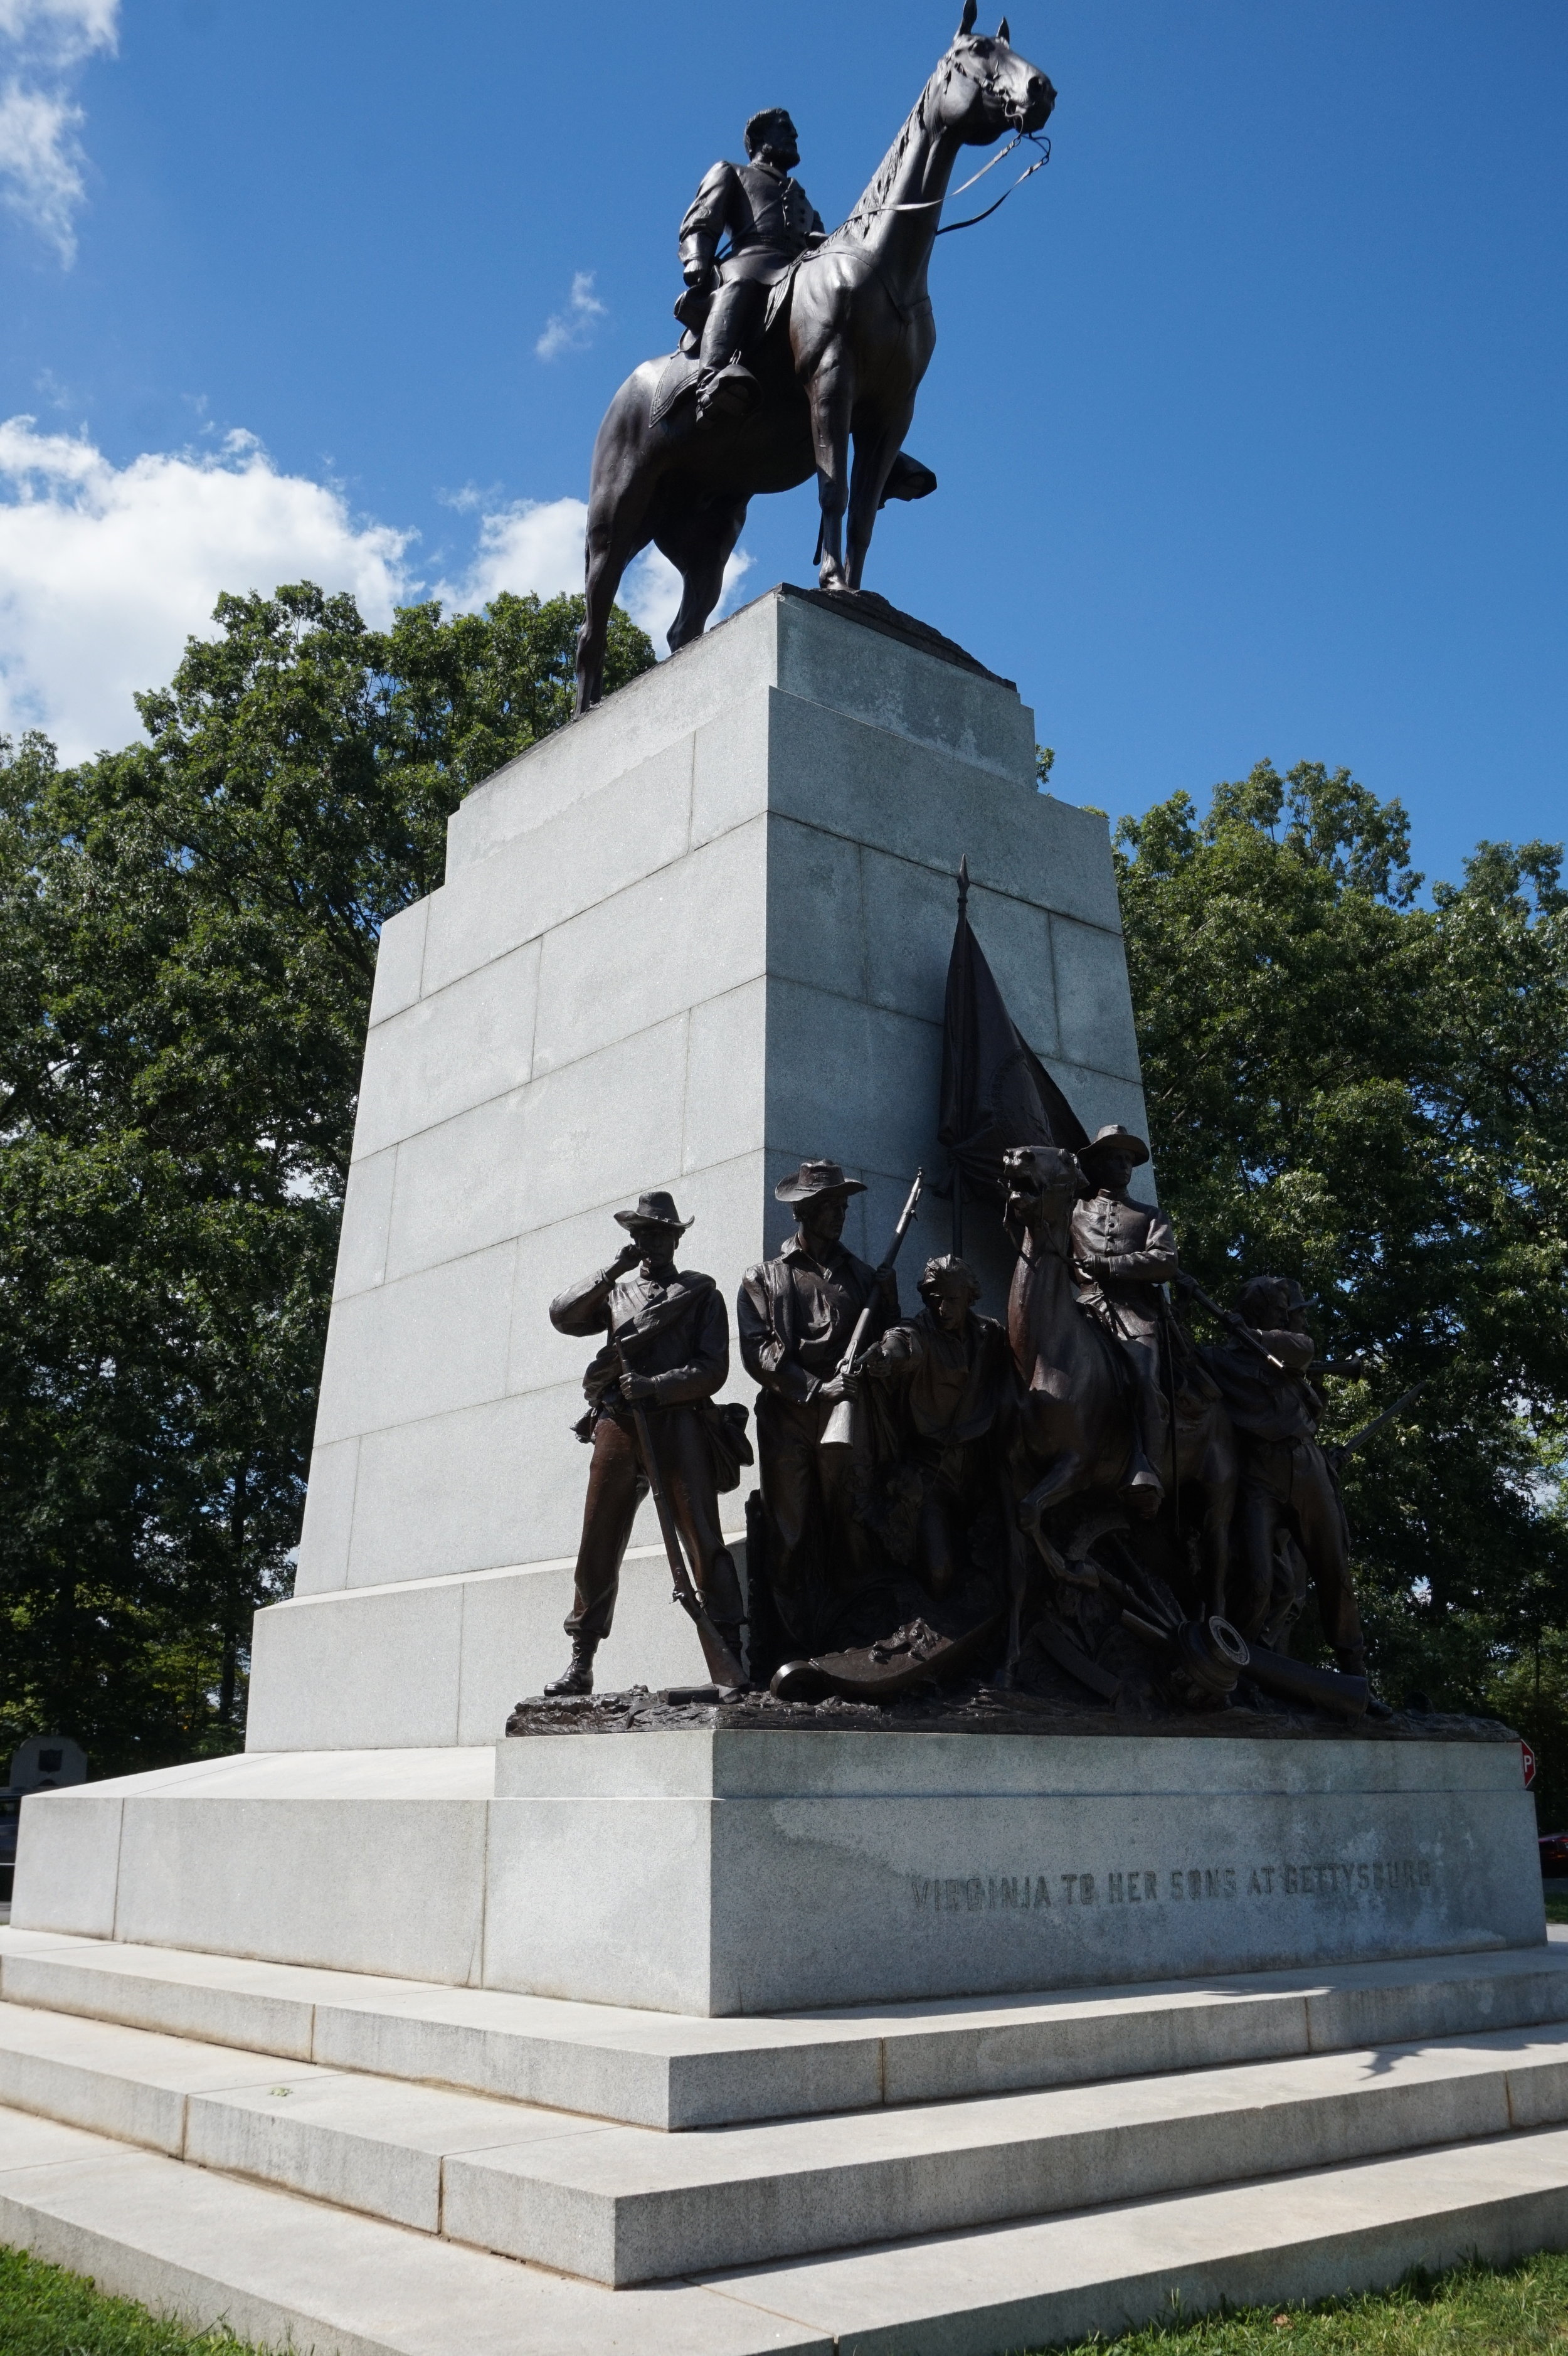  The statue of Robert E. Lee at the Virginia Memorial. 